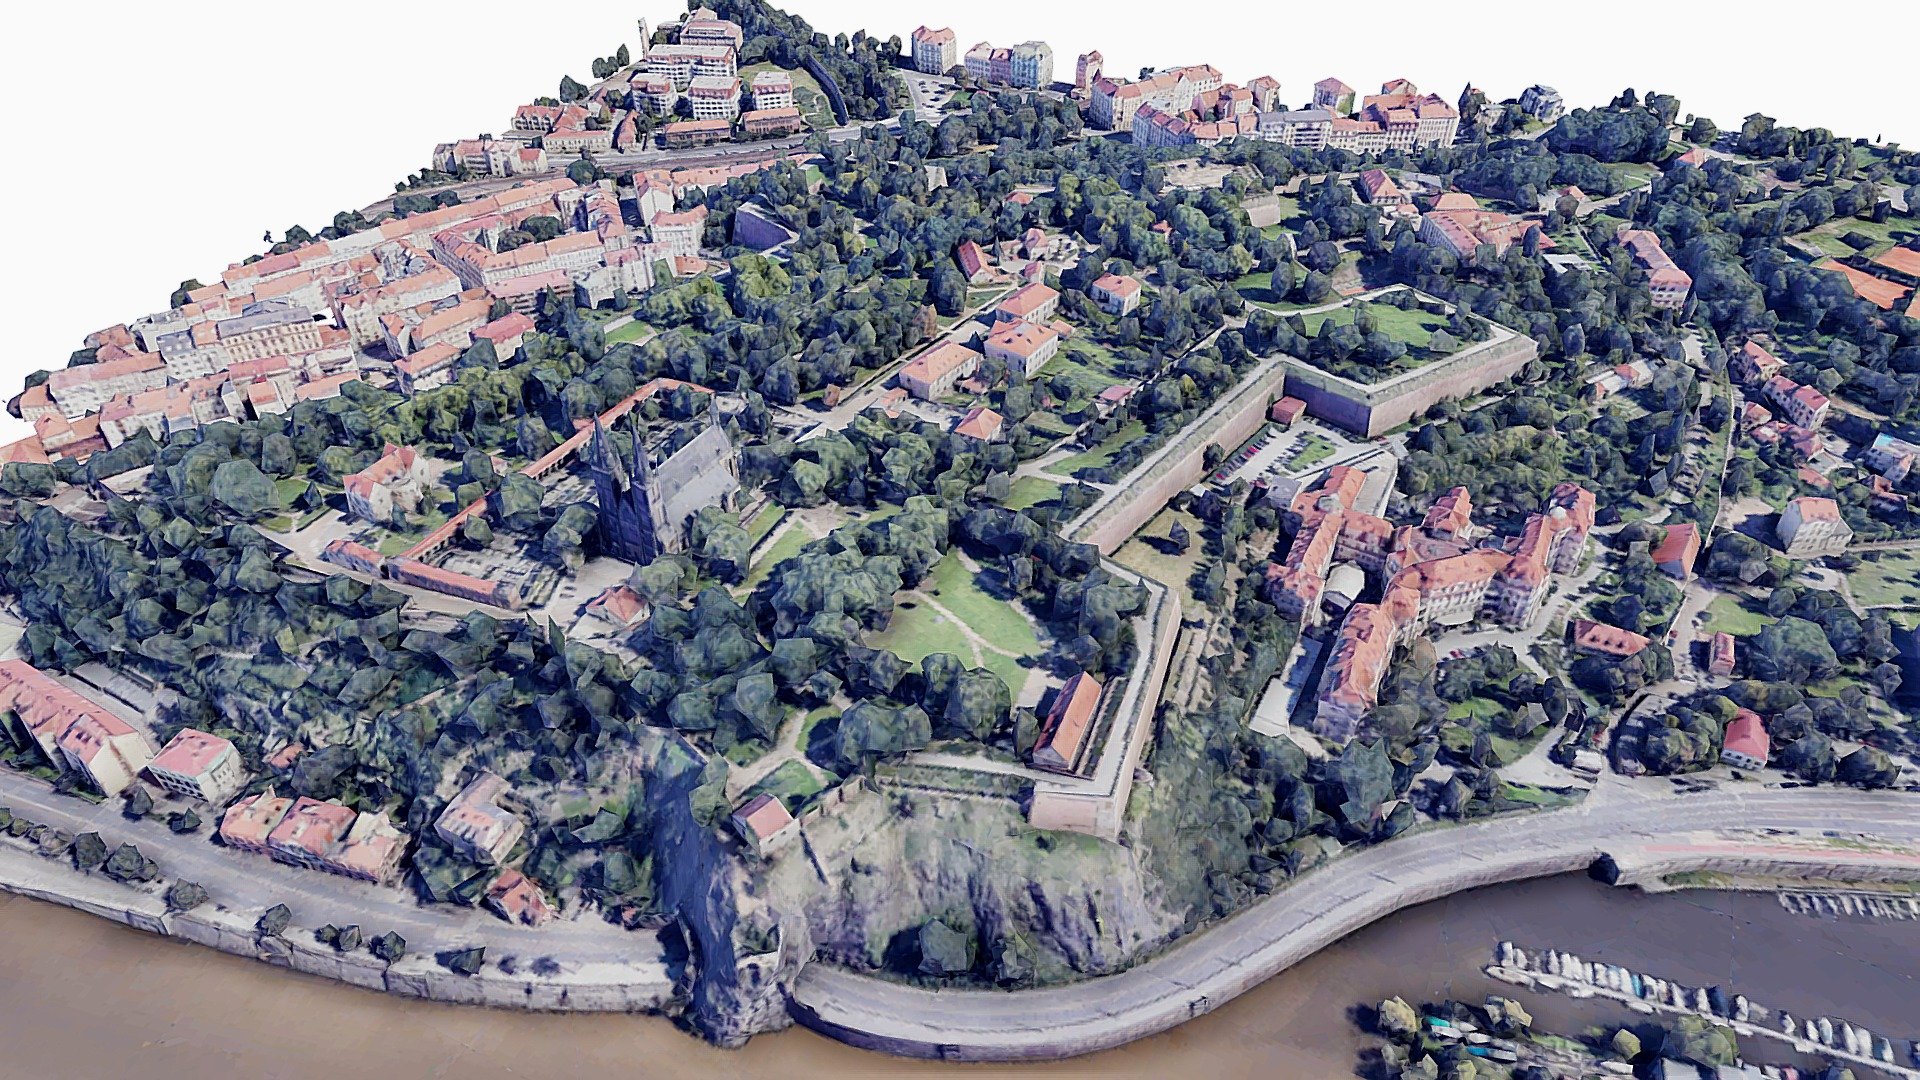 Vyšehrad (Czech for &ldquo;upper castle